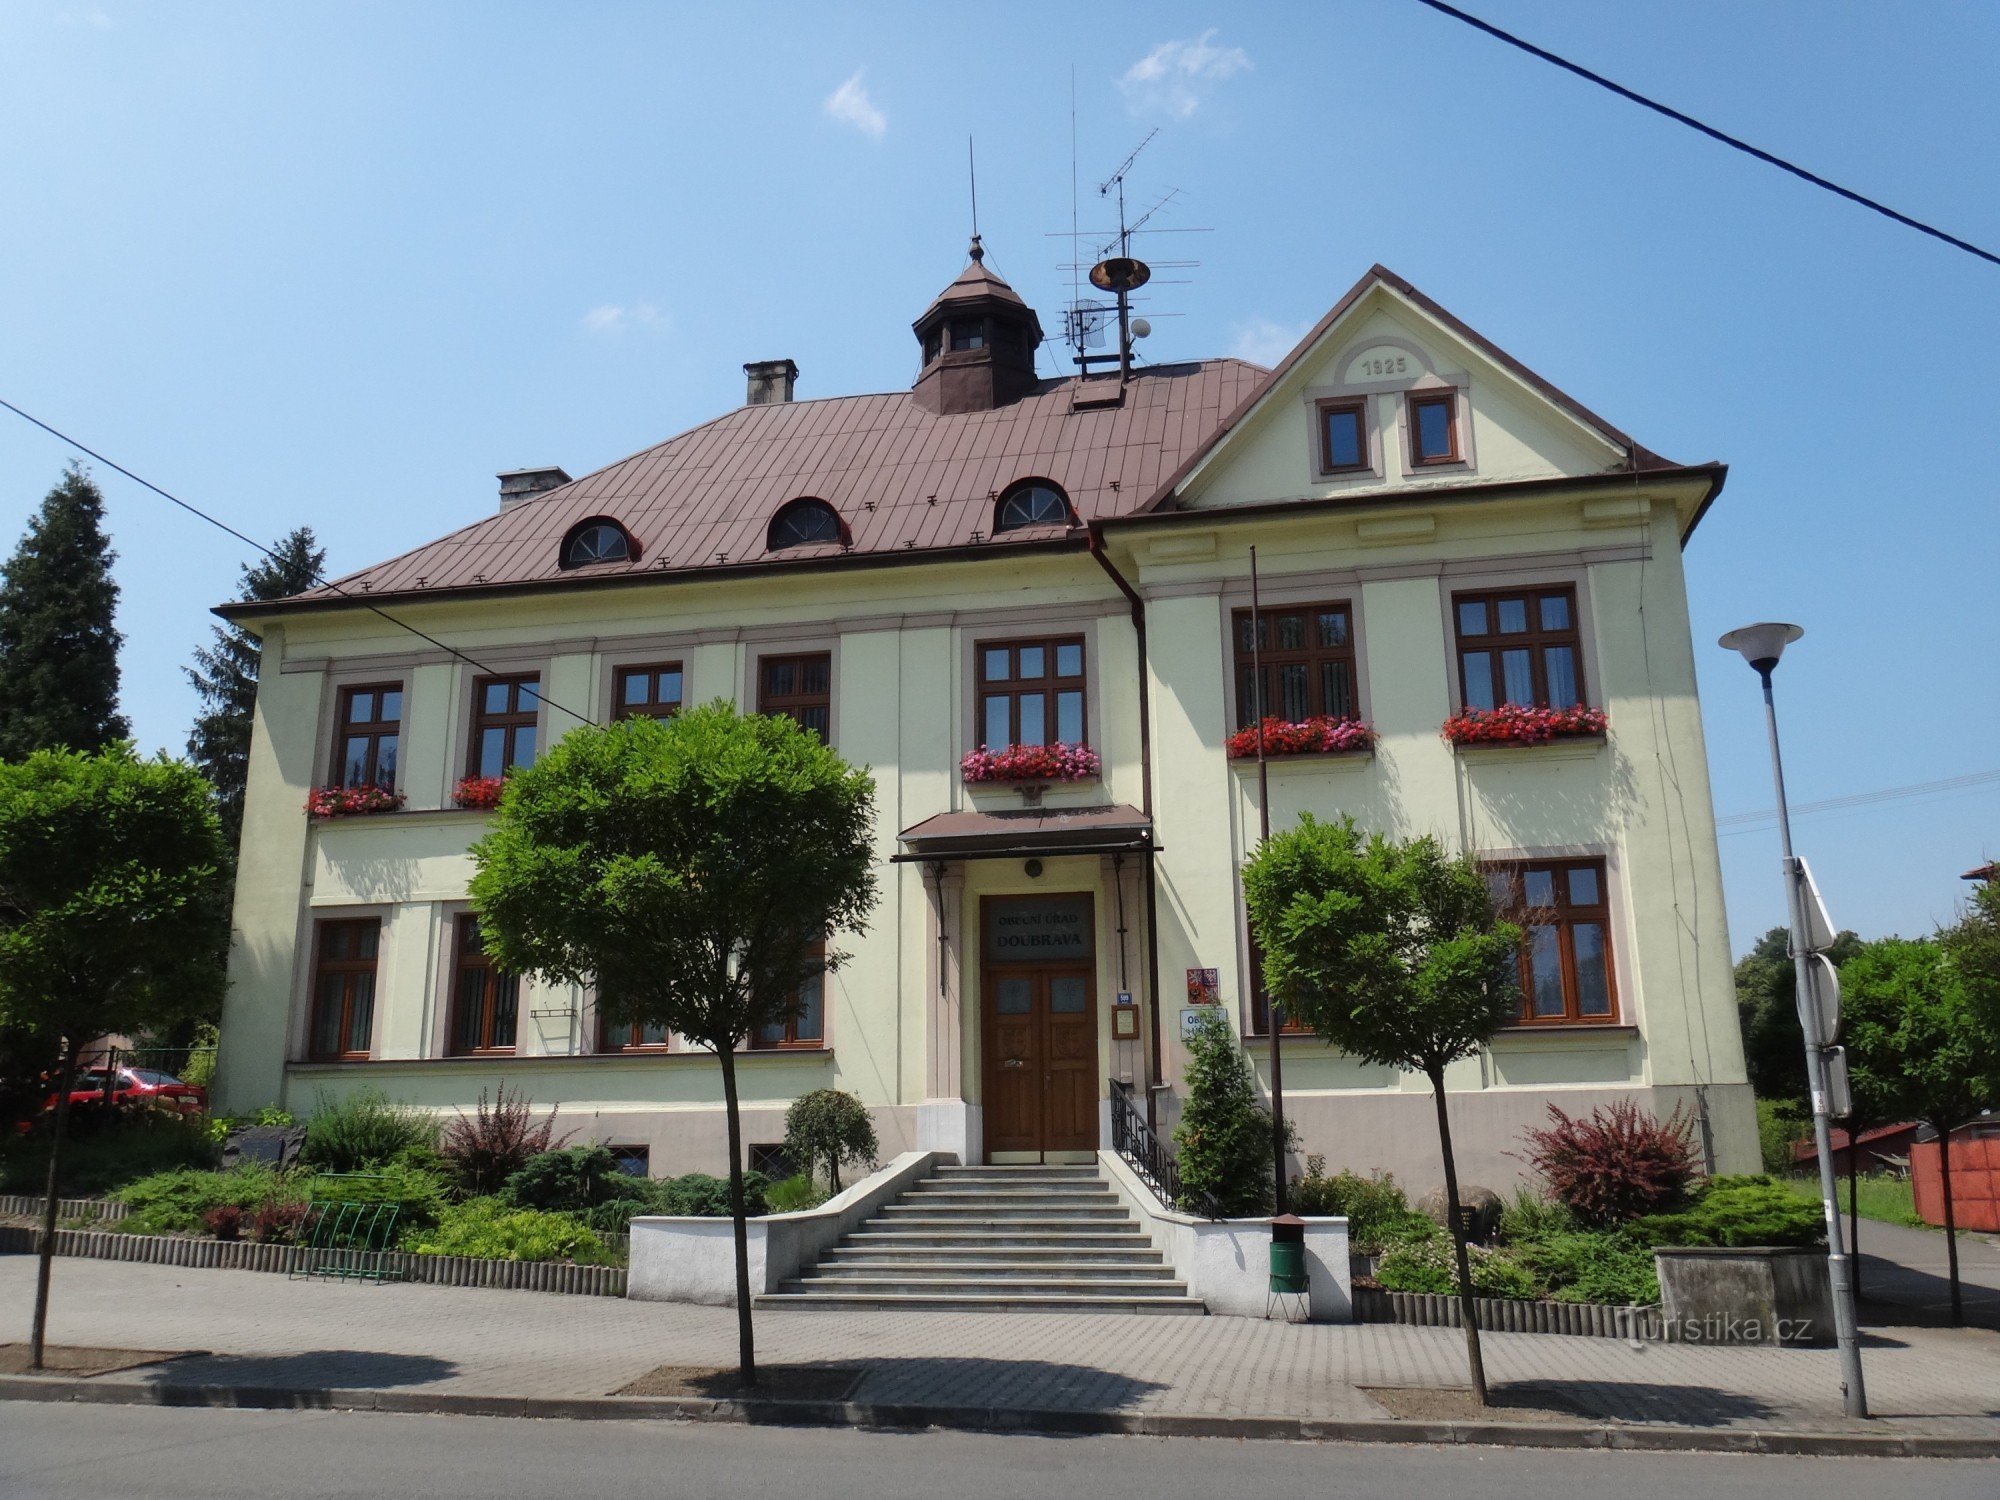 Doubrava National House